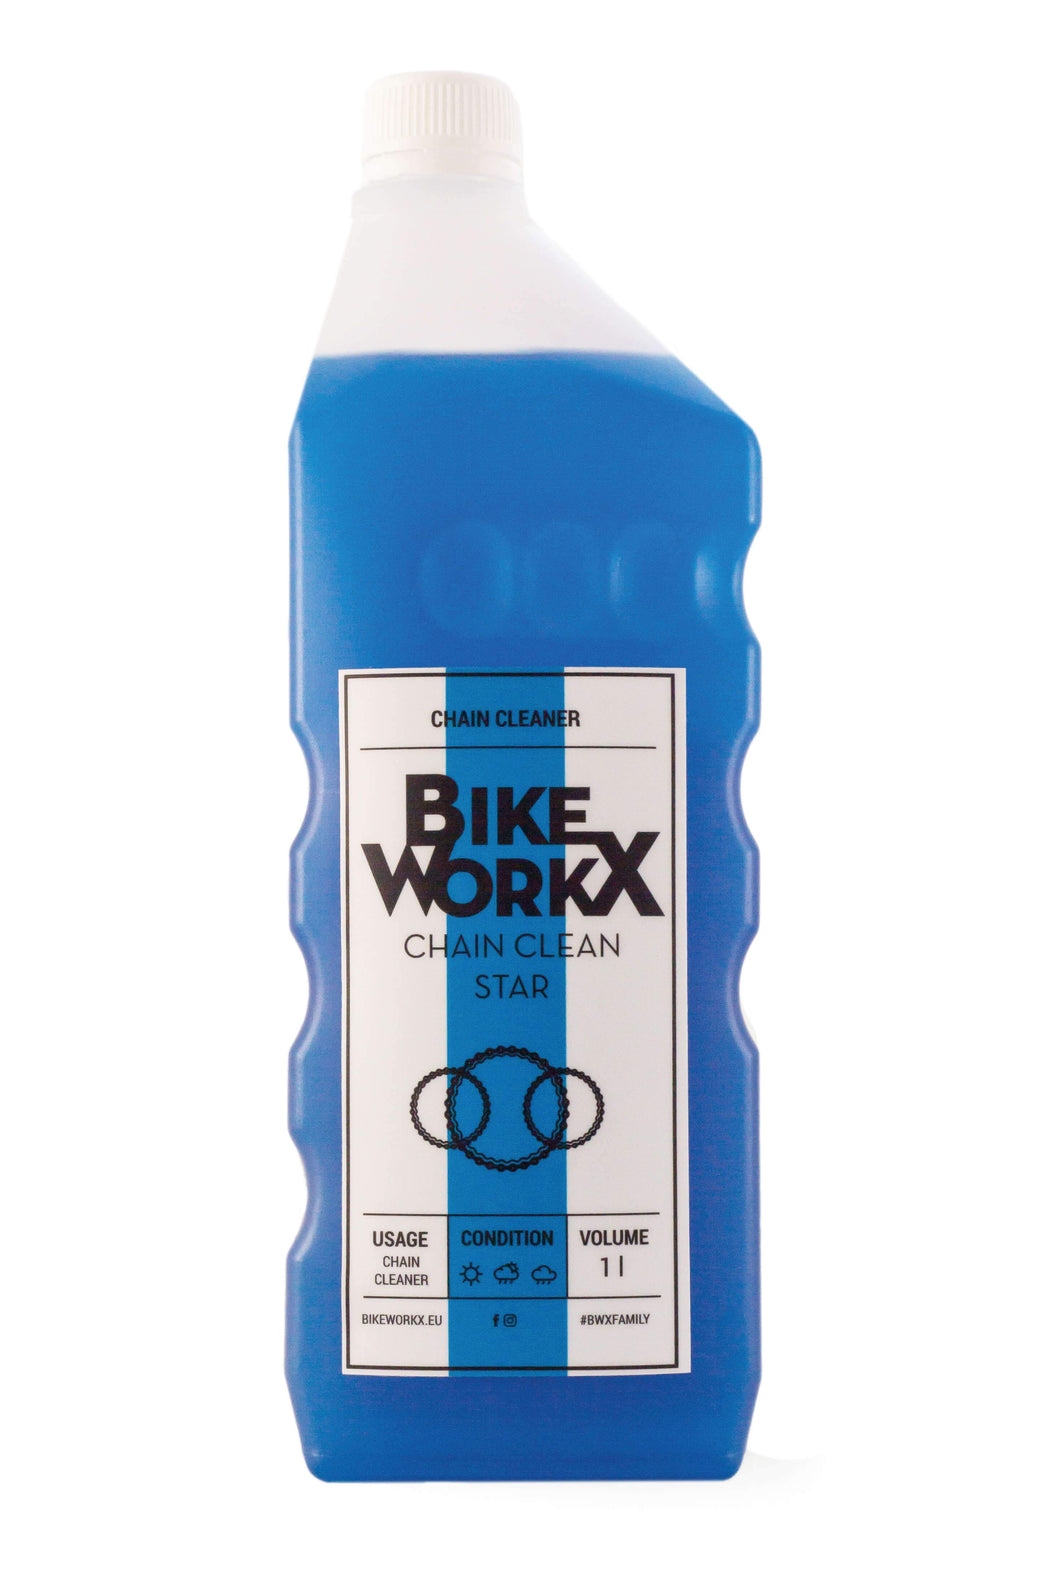 Bikeworkx Chain Clean Star